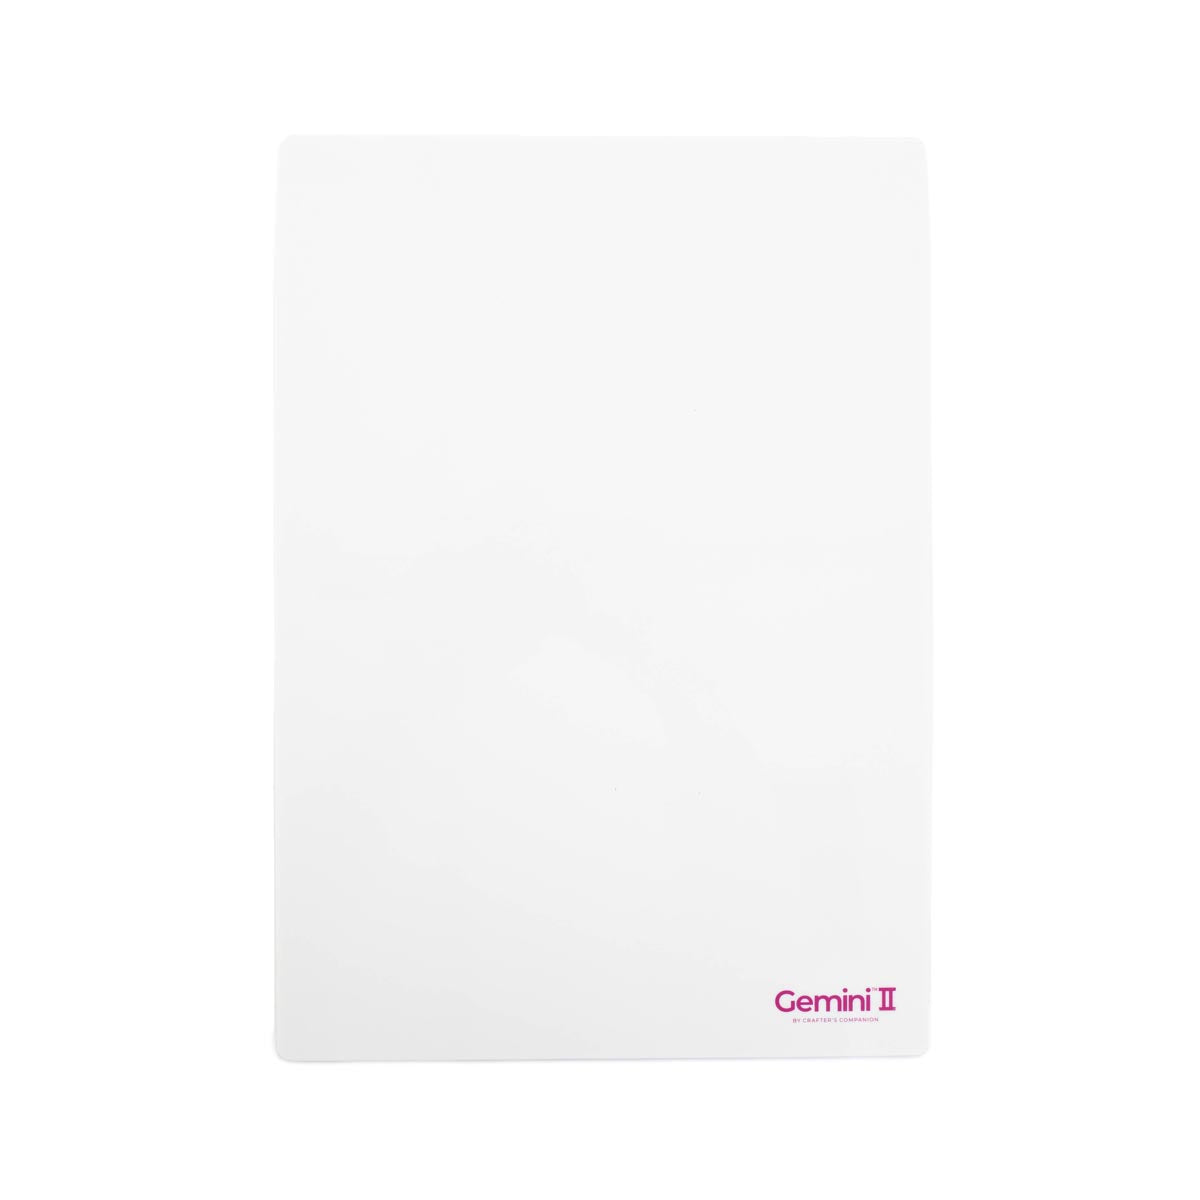 Crafter's Companion - Gemini II Accessories - White Cutting Plate 9"x12.5"